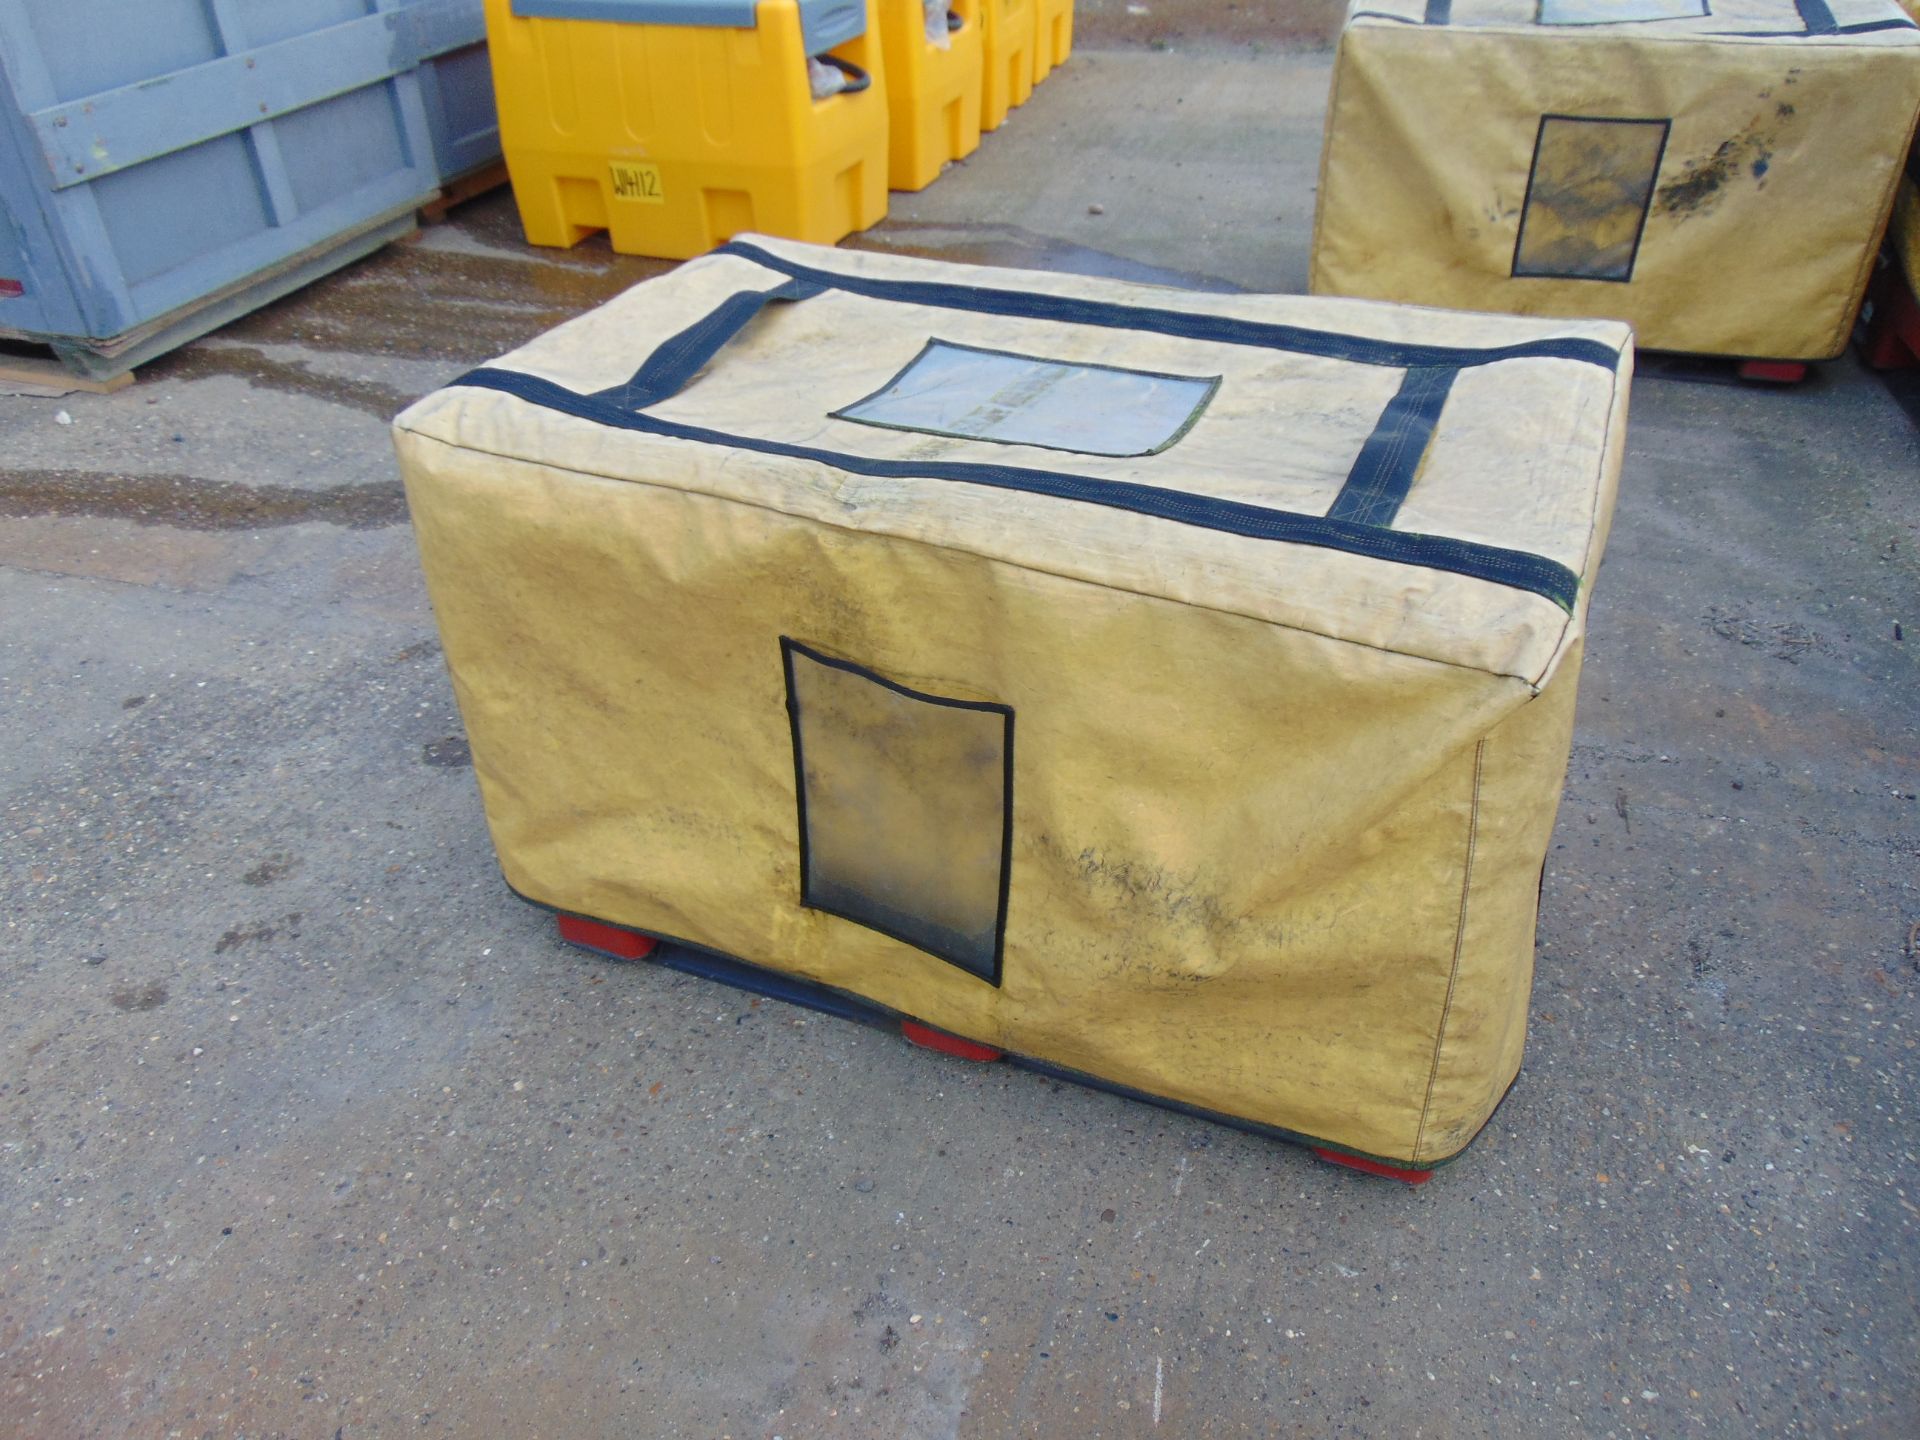 Plastic Storage Pallet Box Container c/w Cover, Size 105cm x 65cm x 70cm - Image 6 of 6